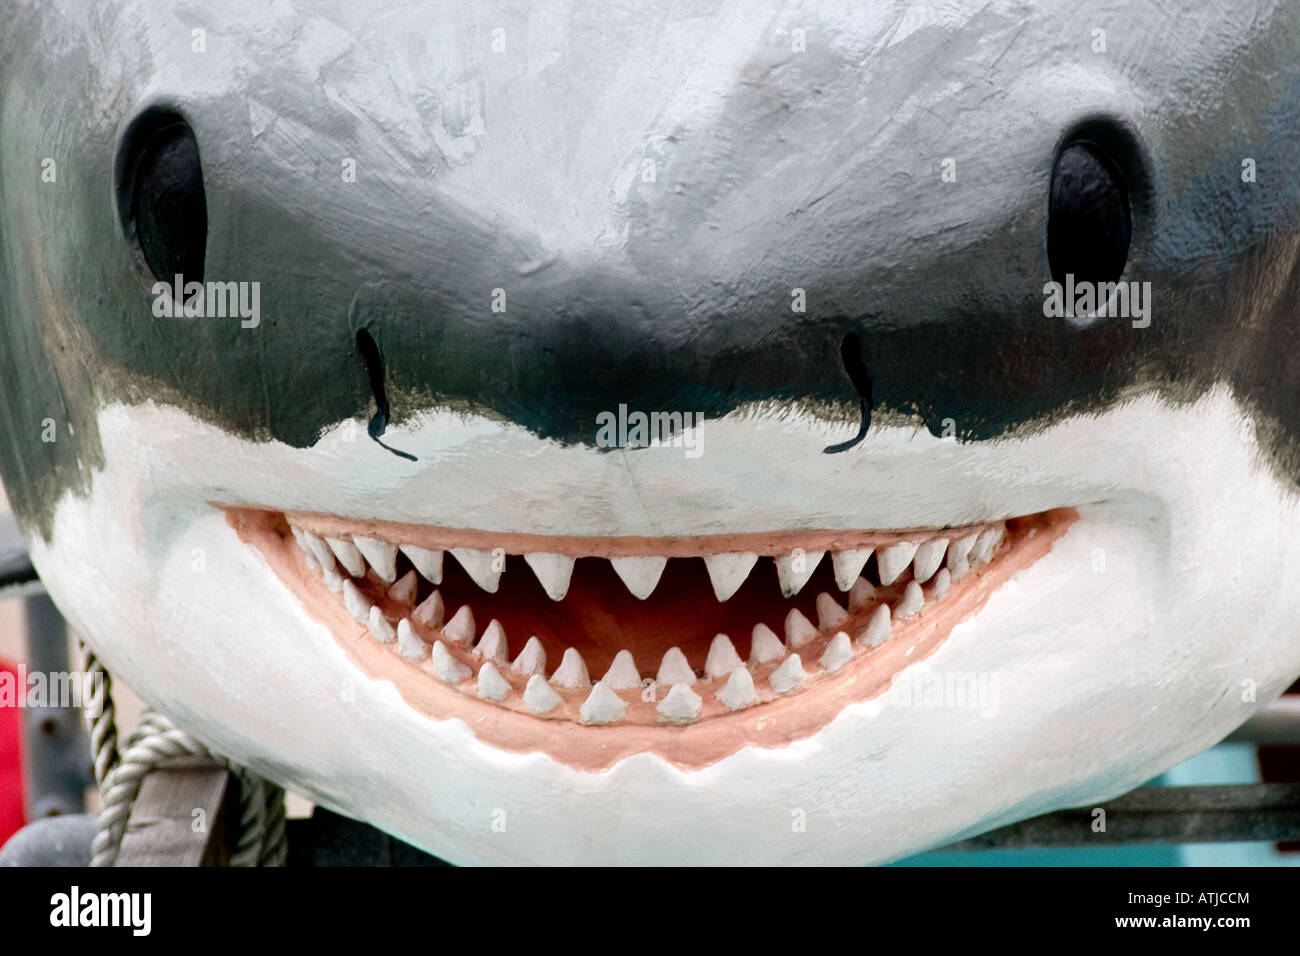 https://c8.alamy.com/comp/ATJCCM/comedy-shark-model-on-fishing-boat-with-big-smile!-ATJCCM.jpg